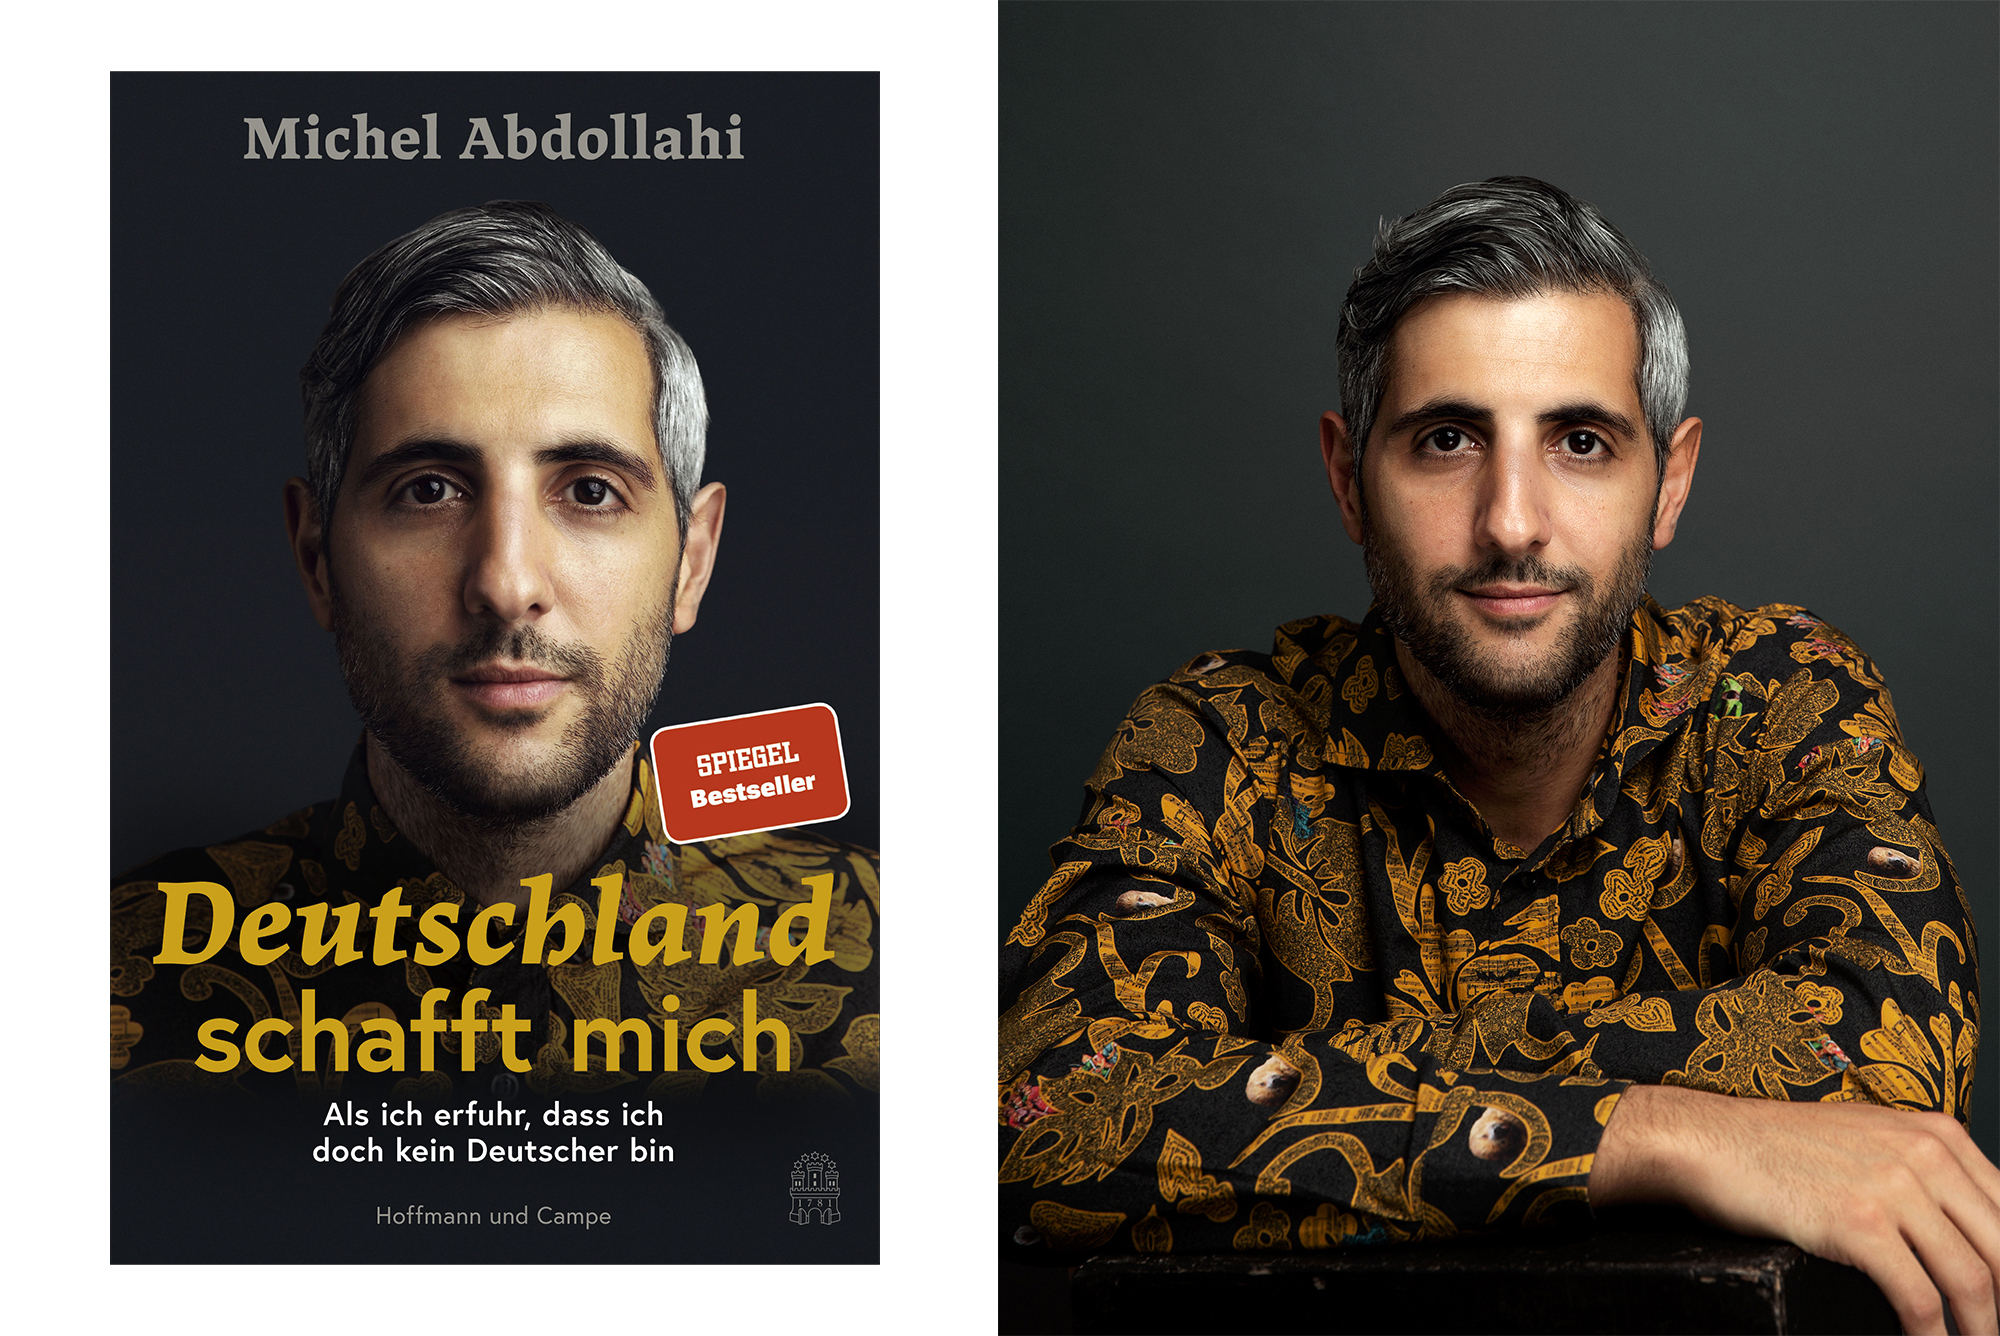 Portraits and book cover for Michel Abdollahi "Deutschland schafft mich"